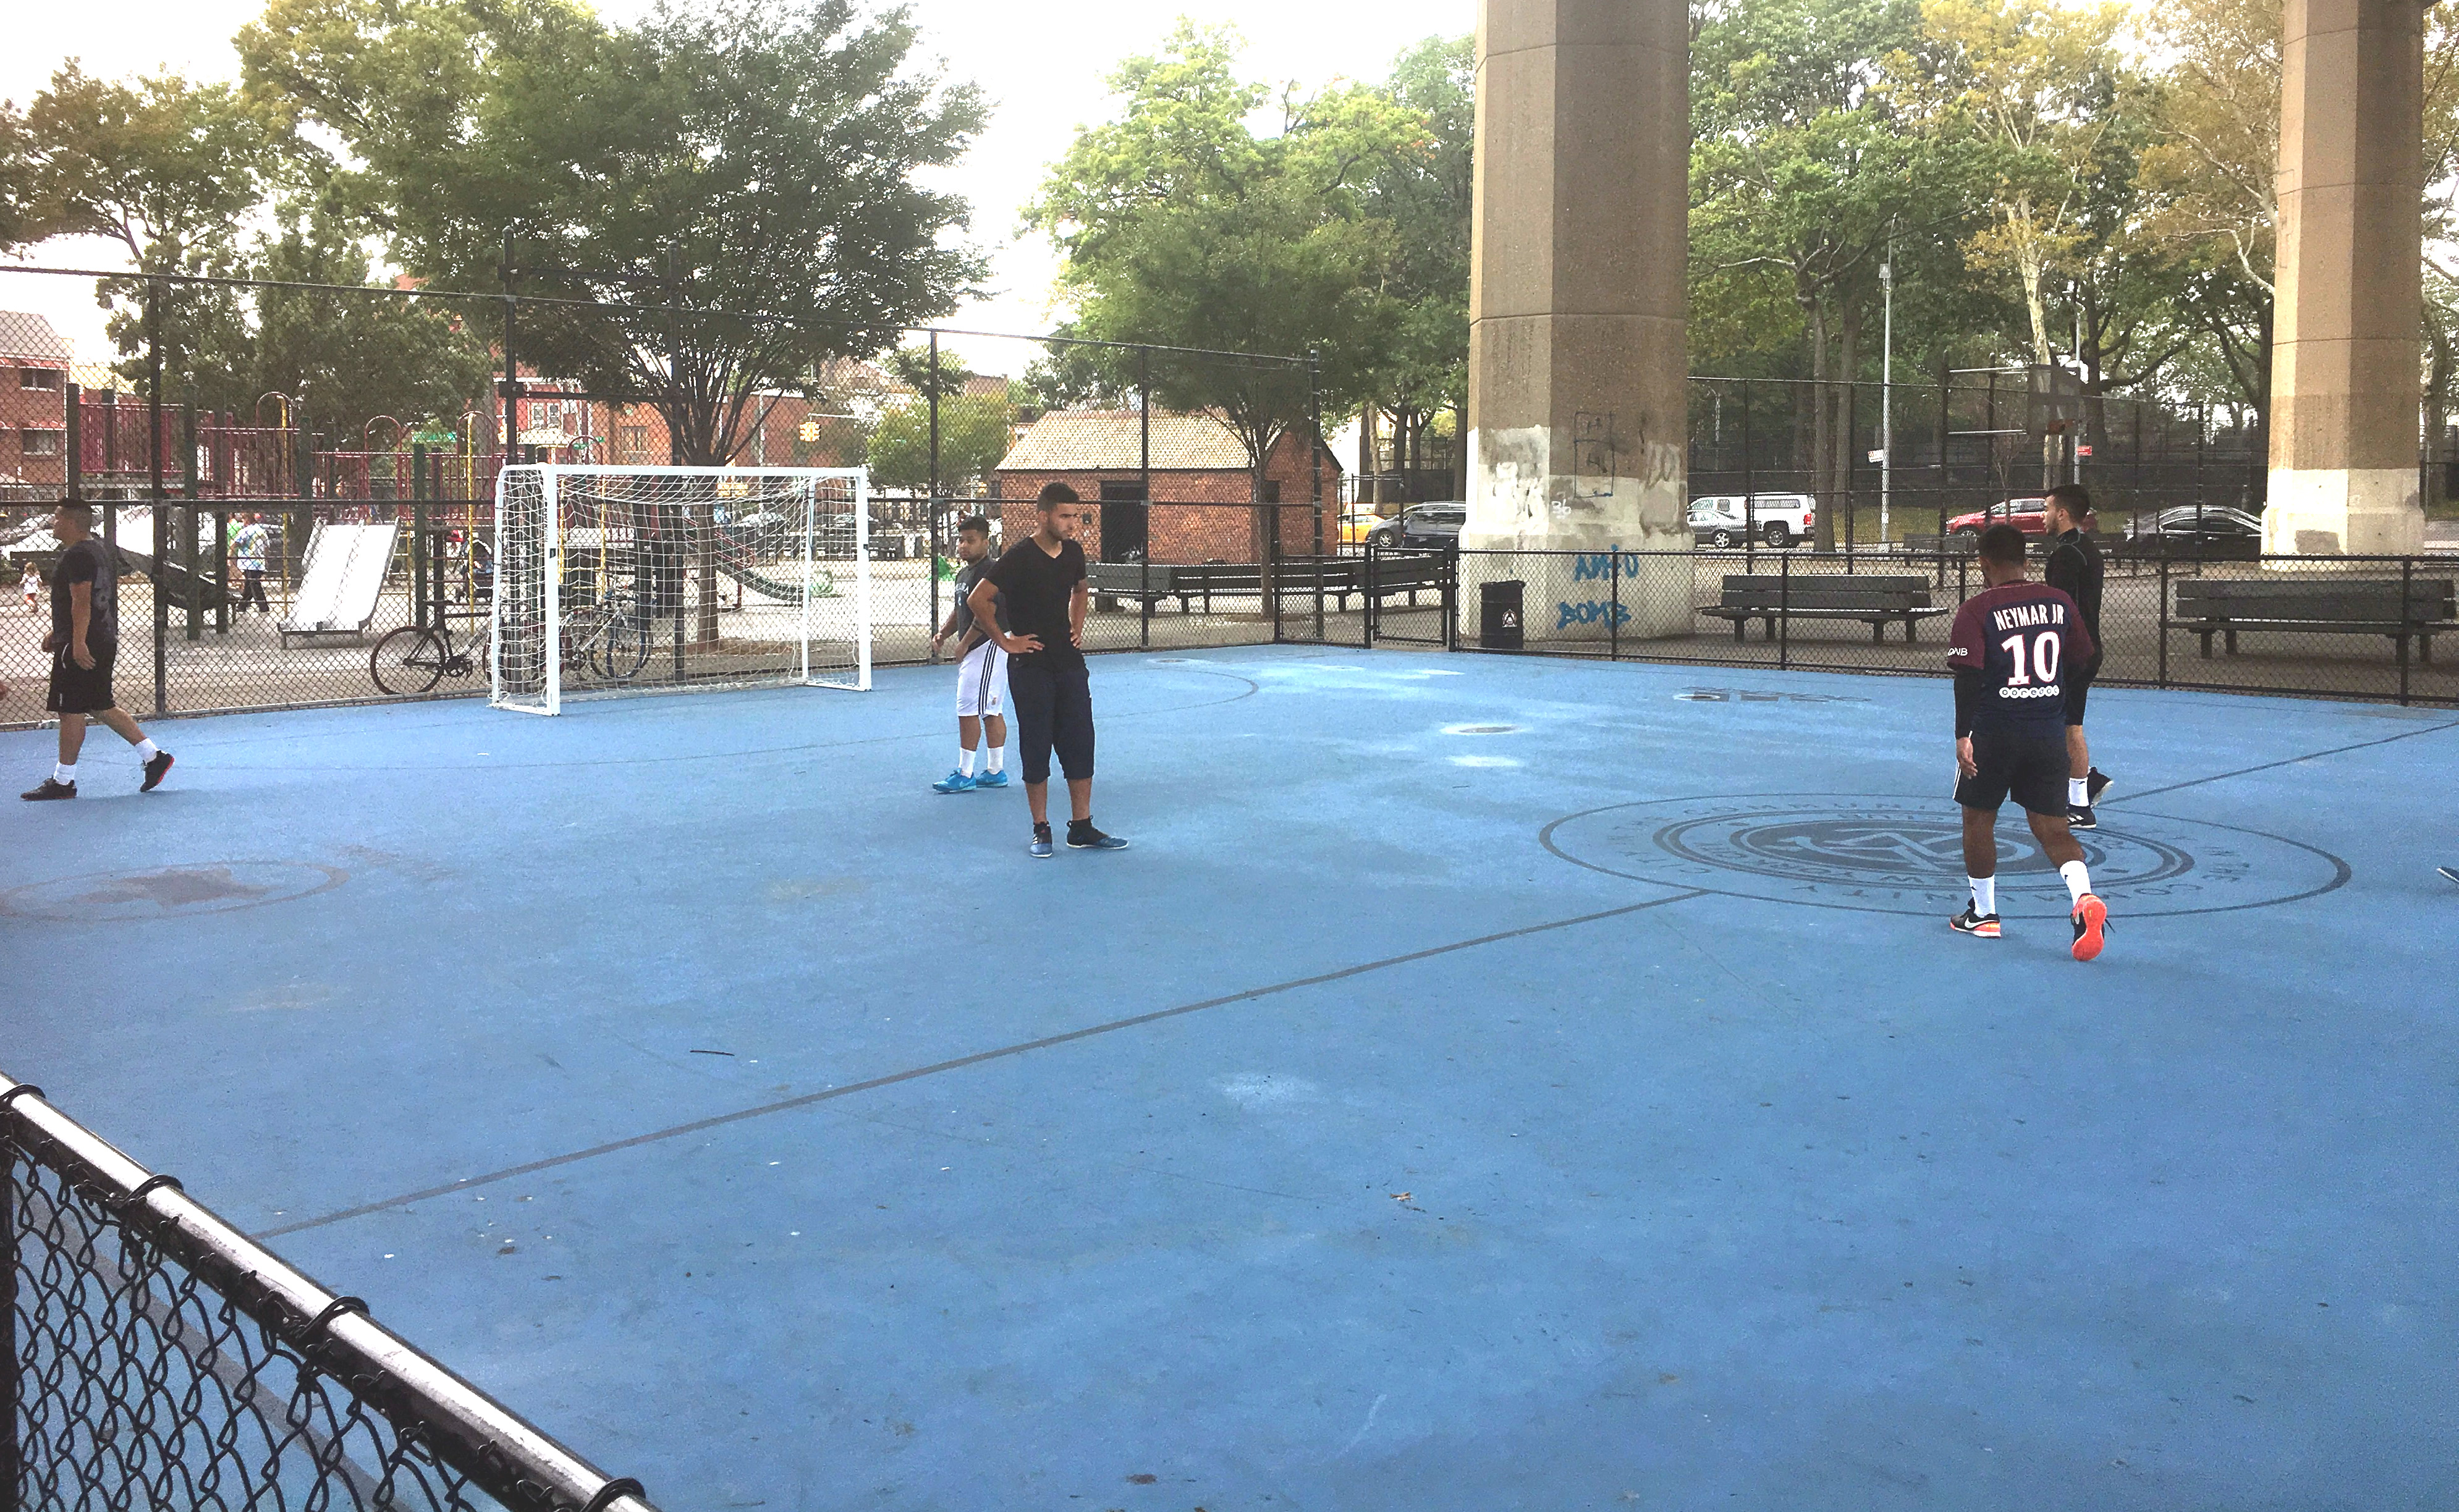 NYC Initiative Soccer Field Opens at Triborough Bridge Playground